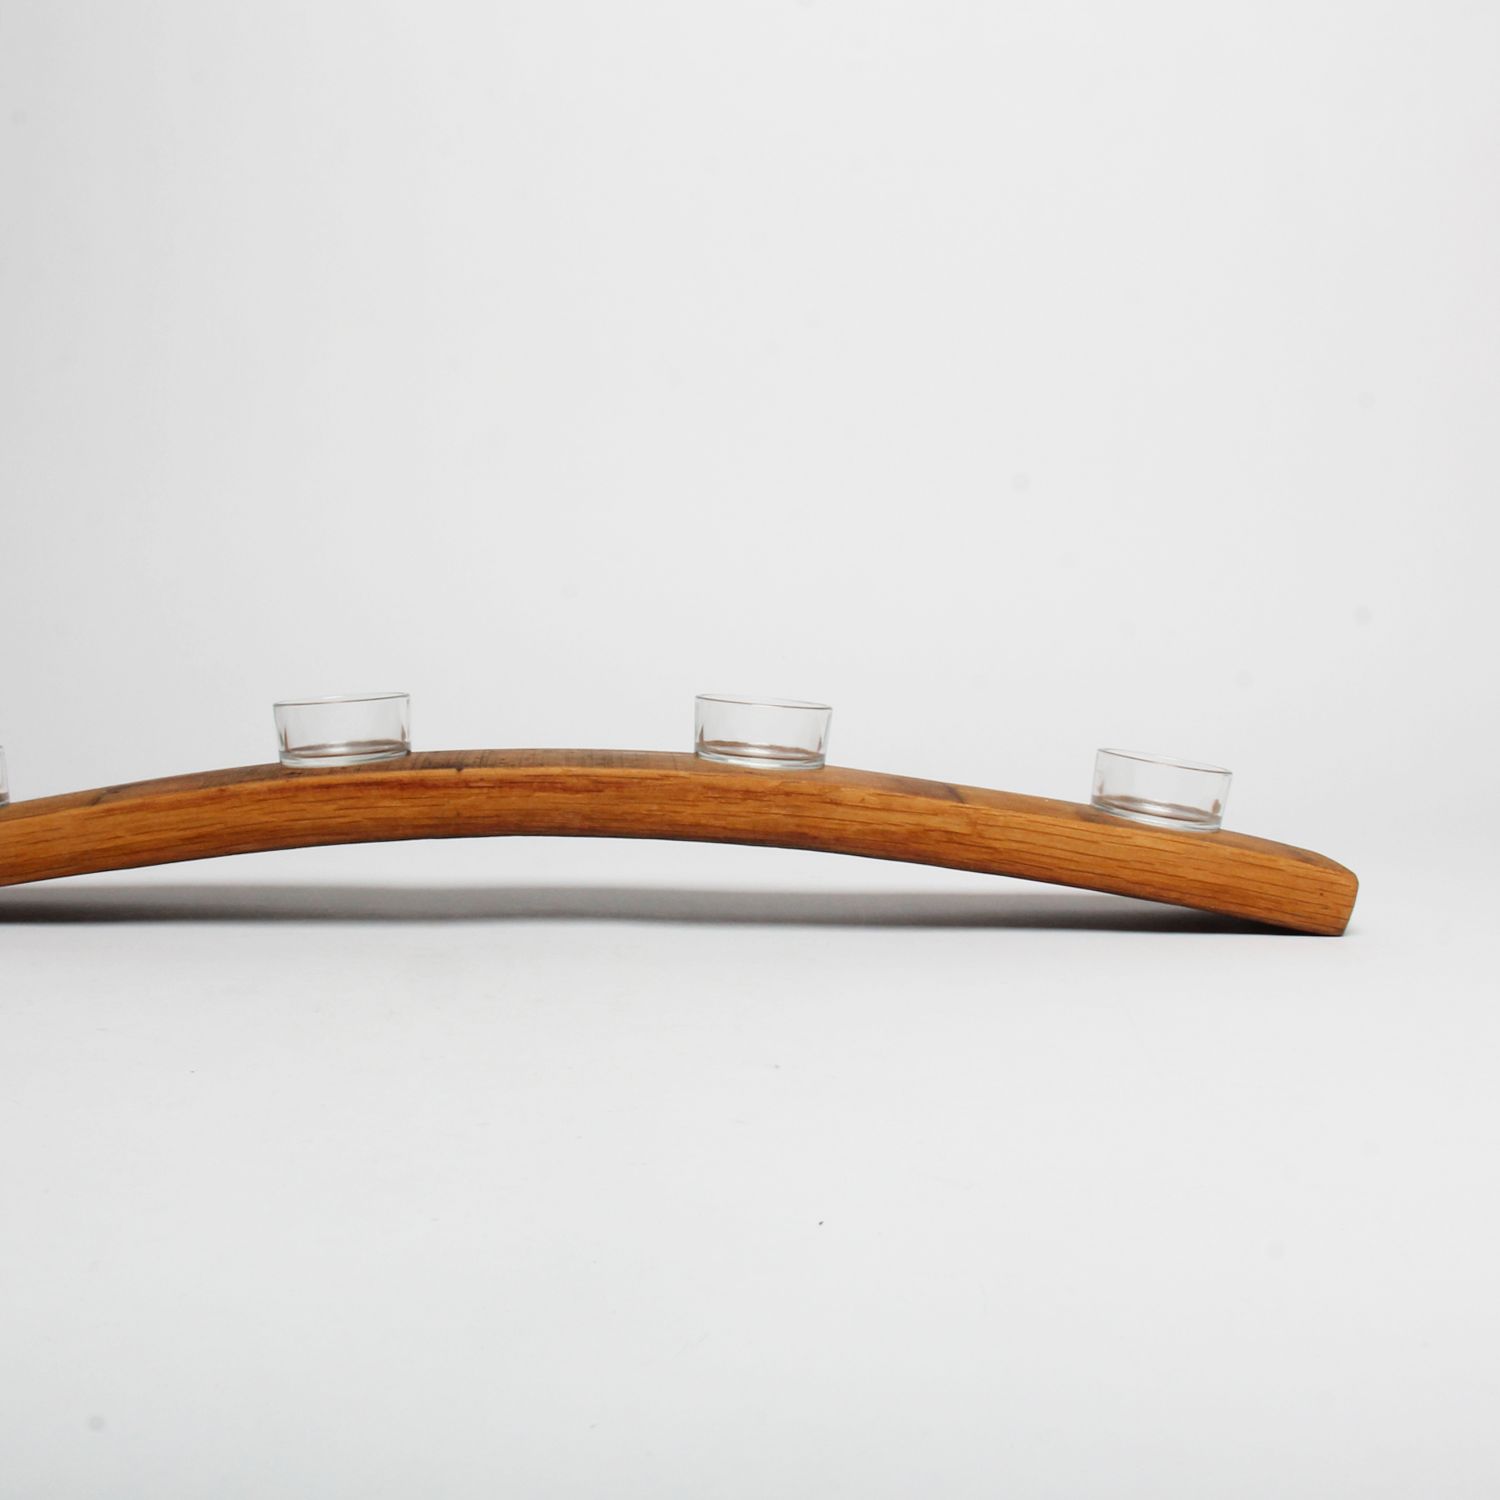 Wineplanks: Candleholder Half Product Image 3 of 3